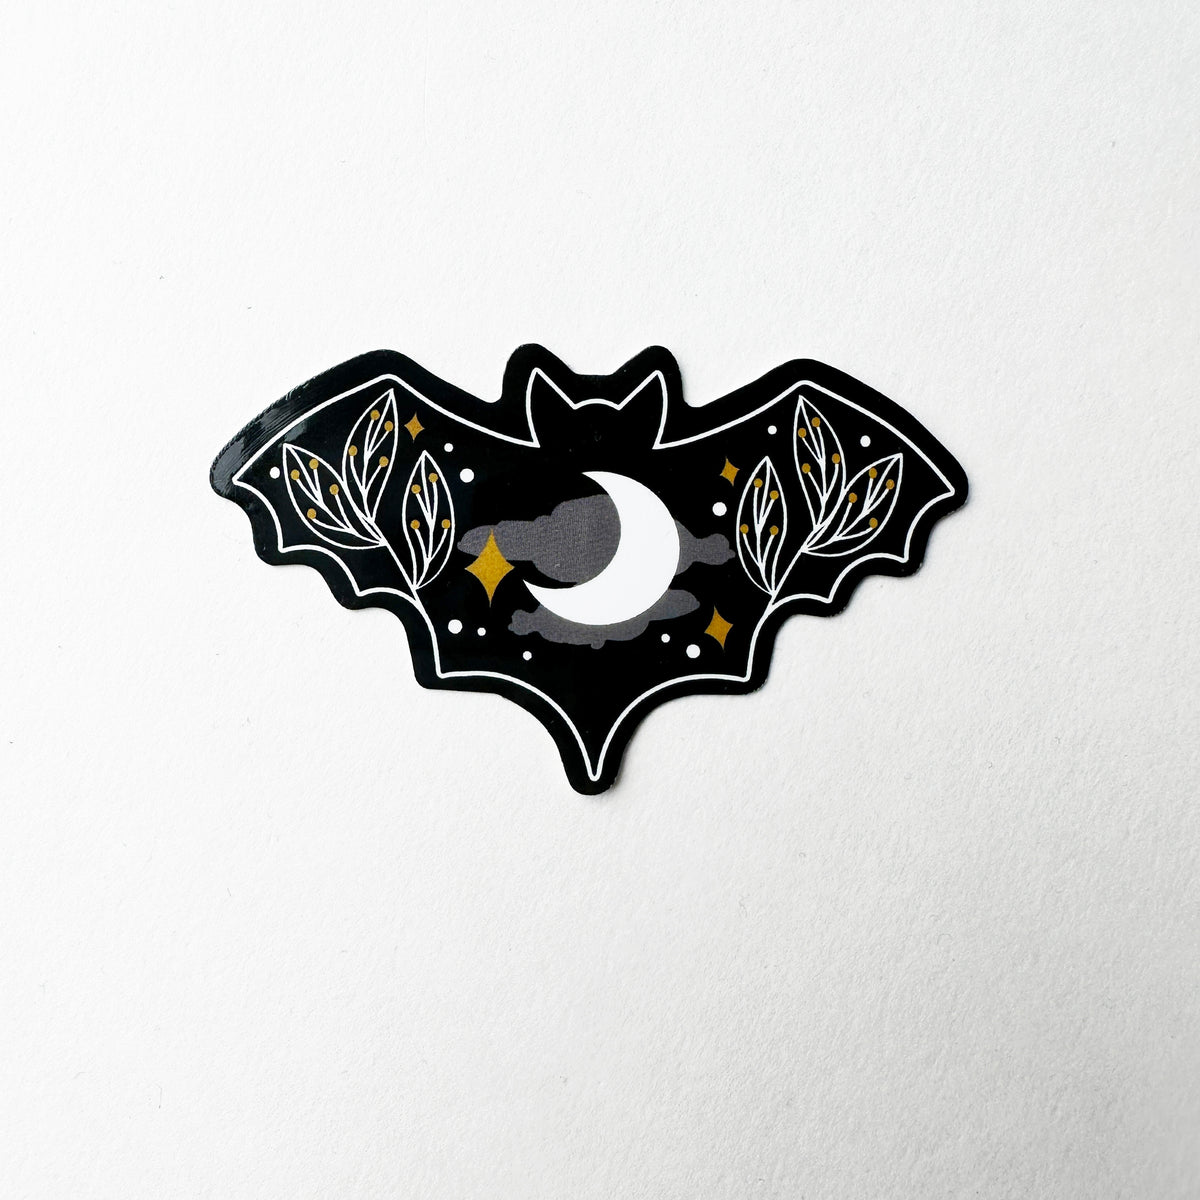 Botanical Bat Decal Sticker